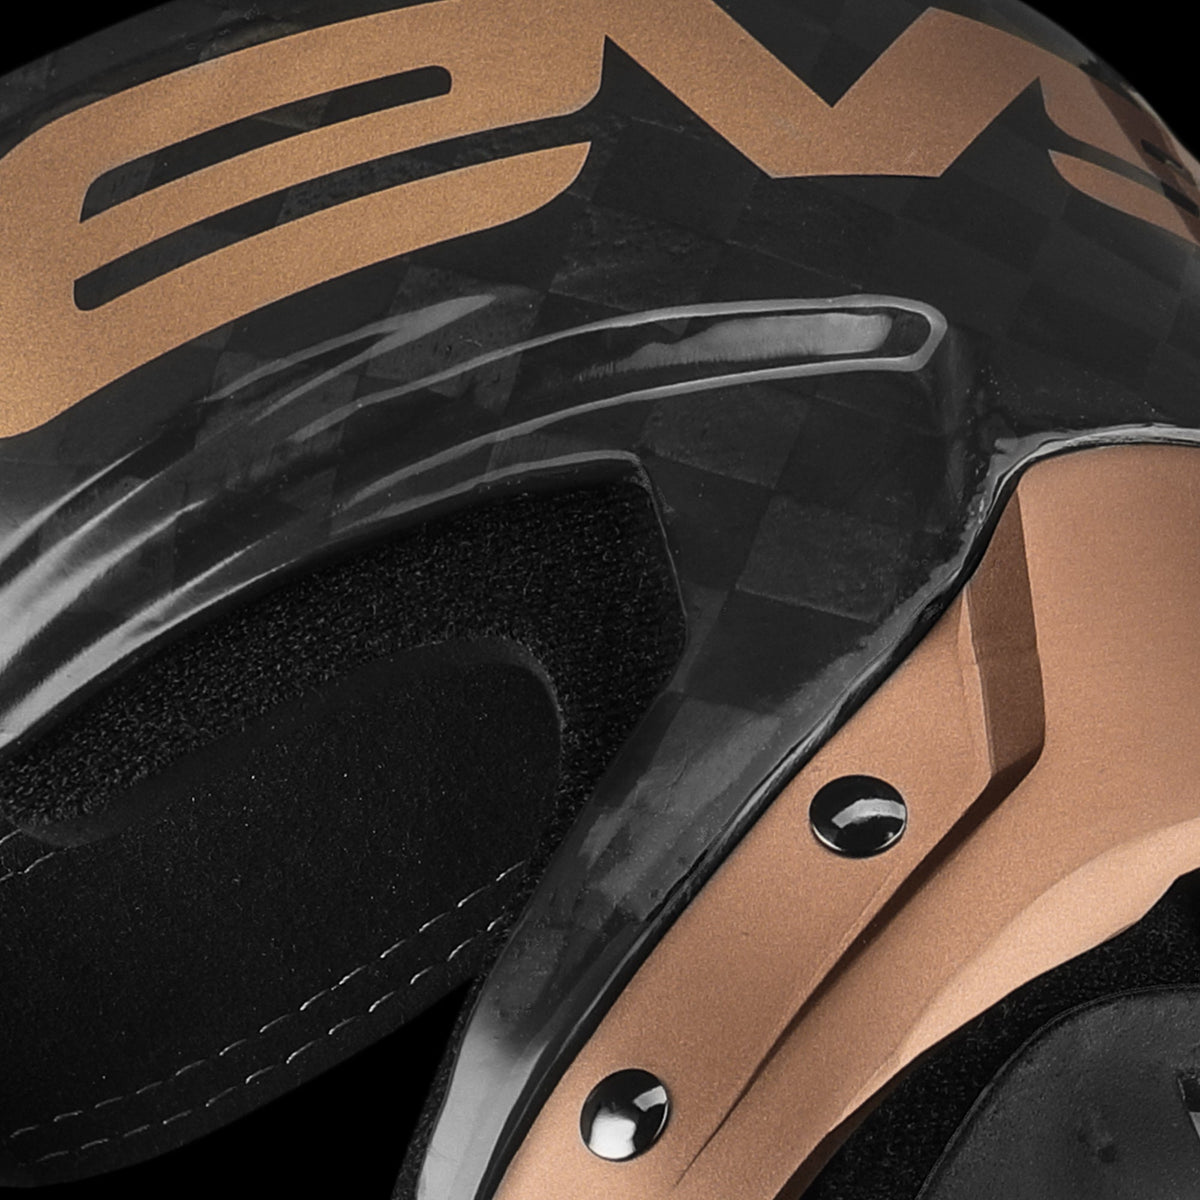 Axis Pro Knee Brace - Single - EVS Sports